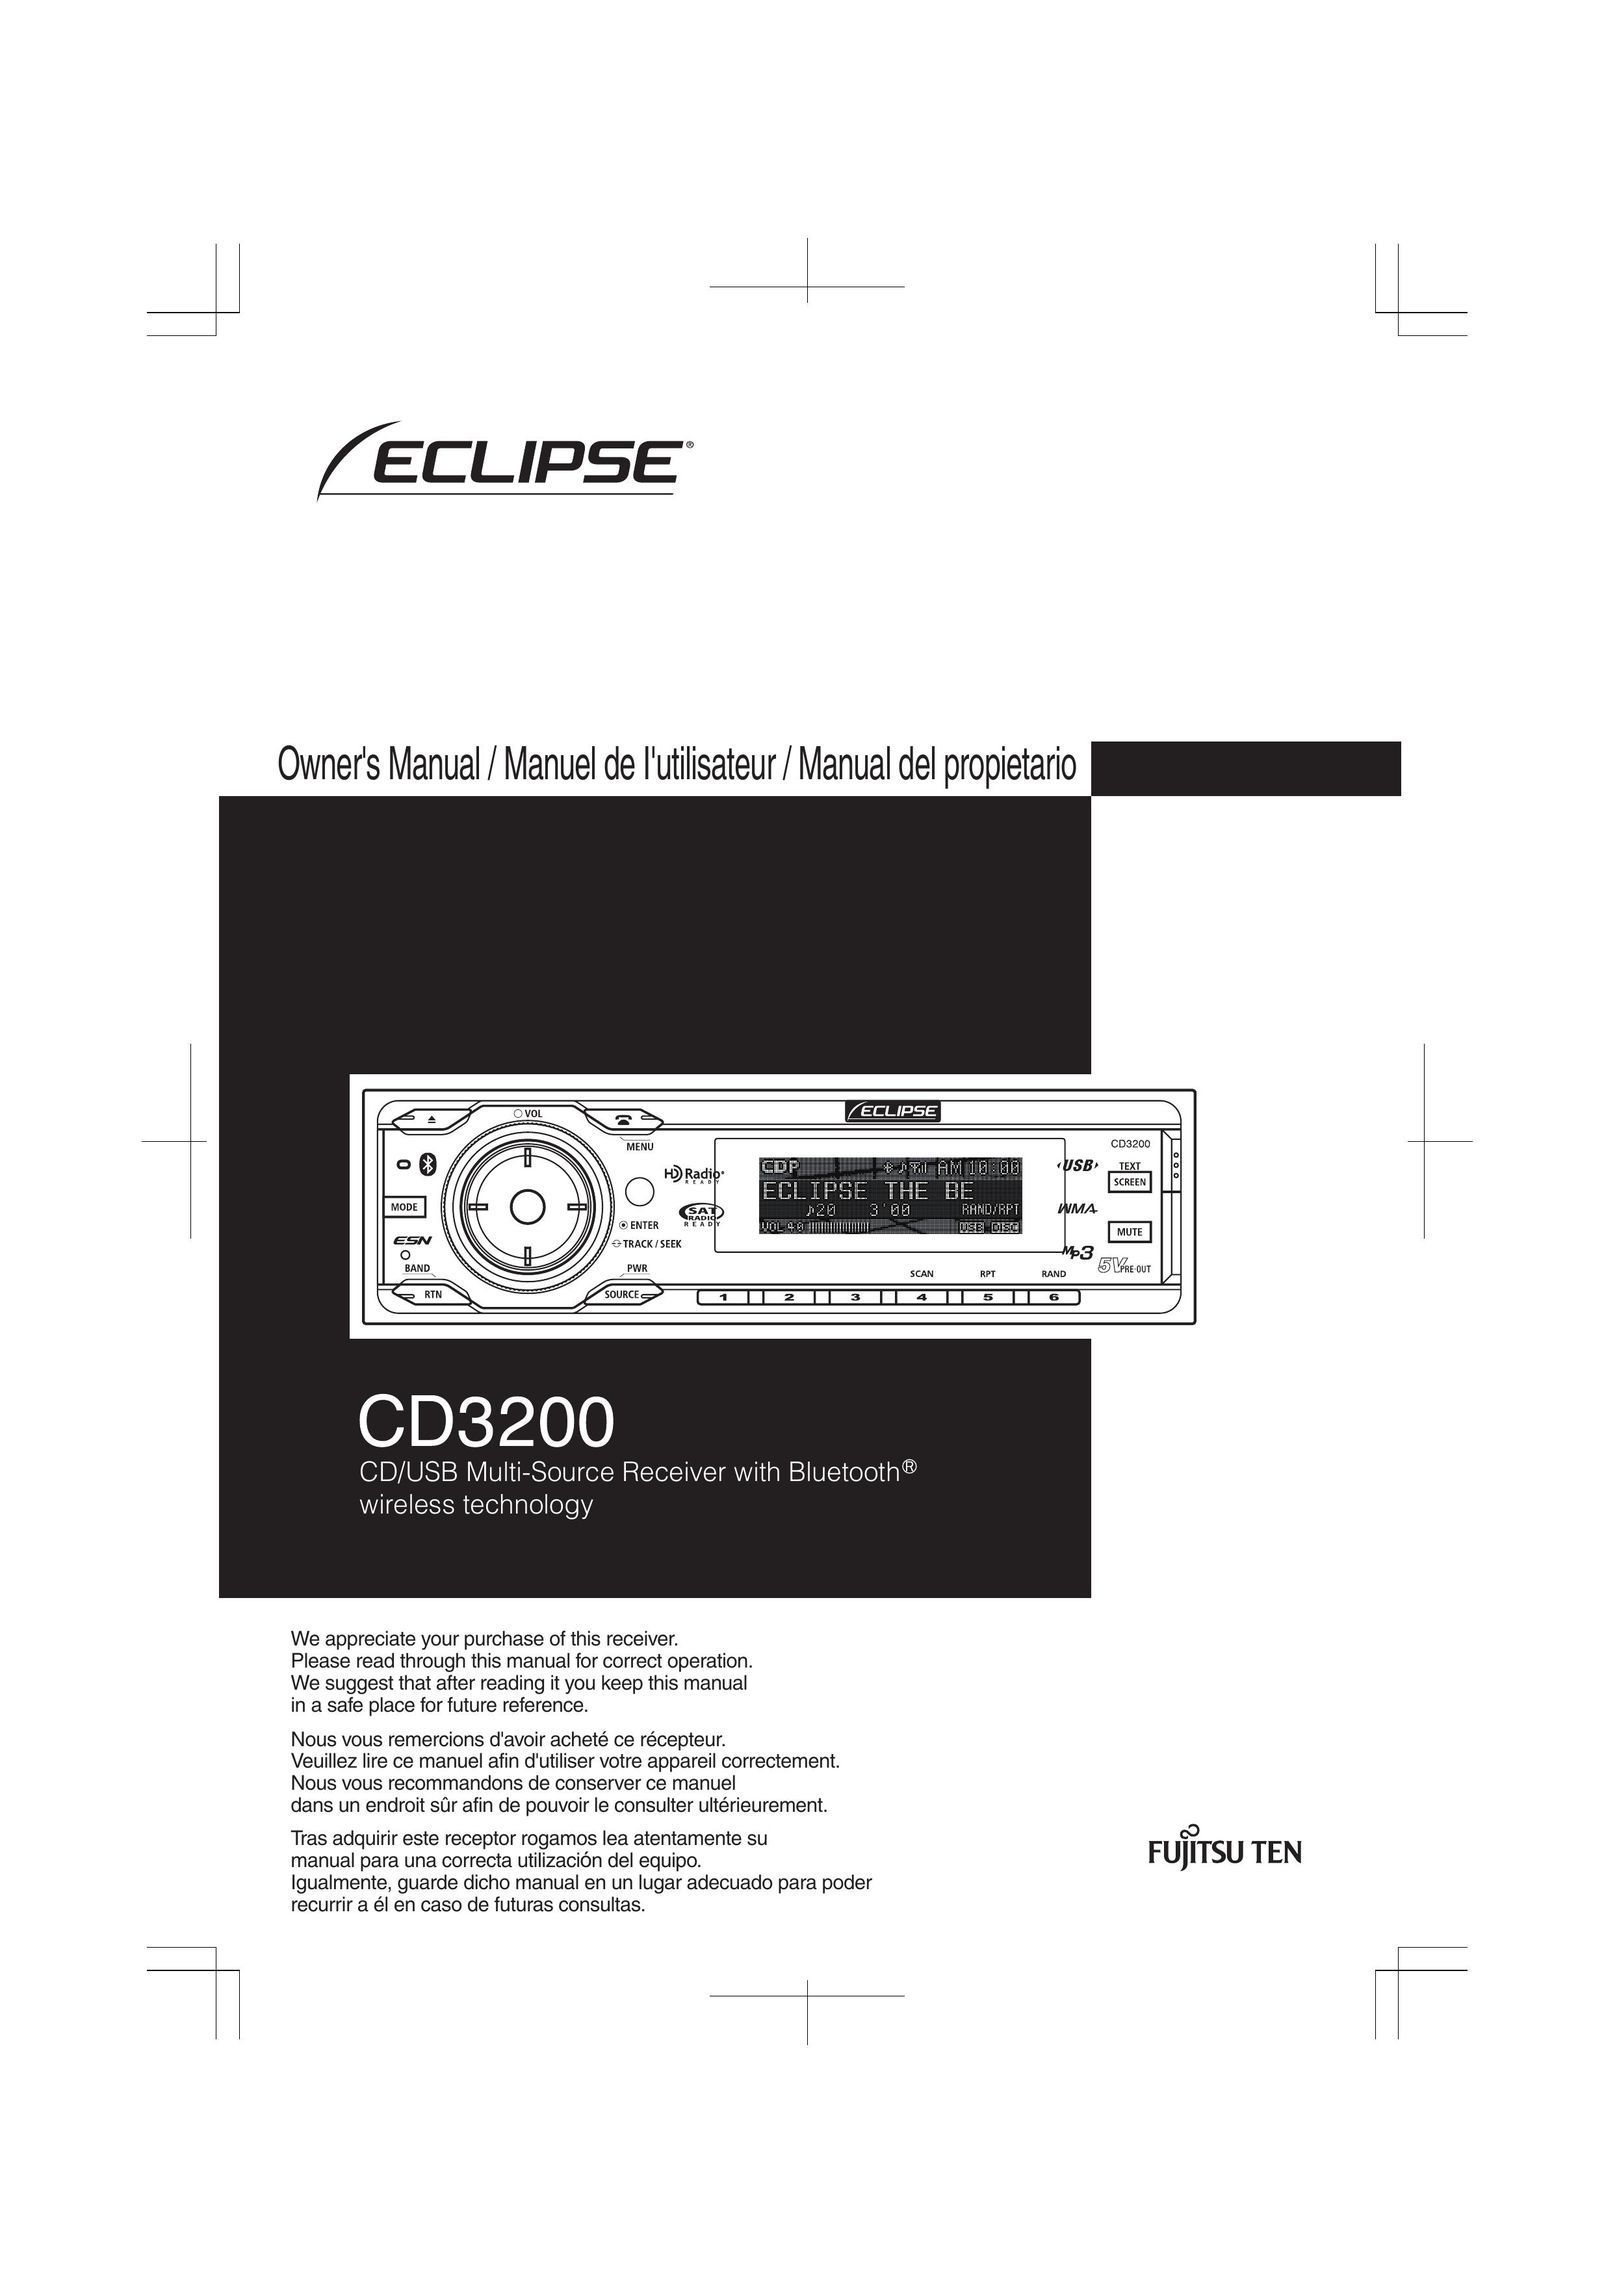 Eclipse - Fujitsu Ten CD3200 Car Stereo System User Manual